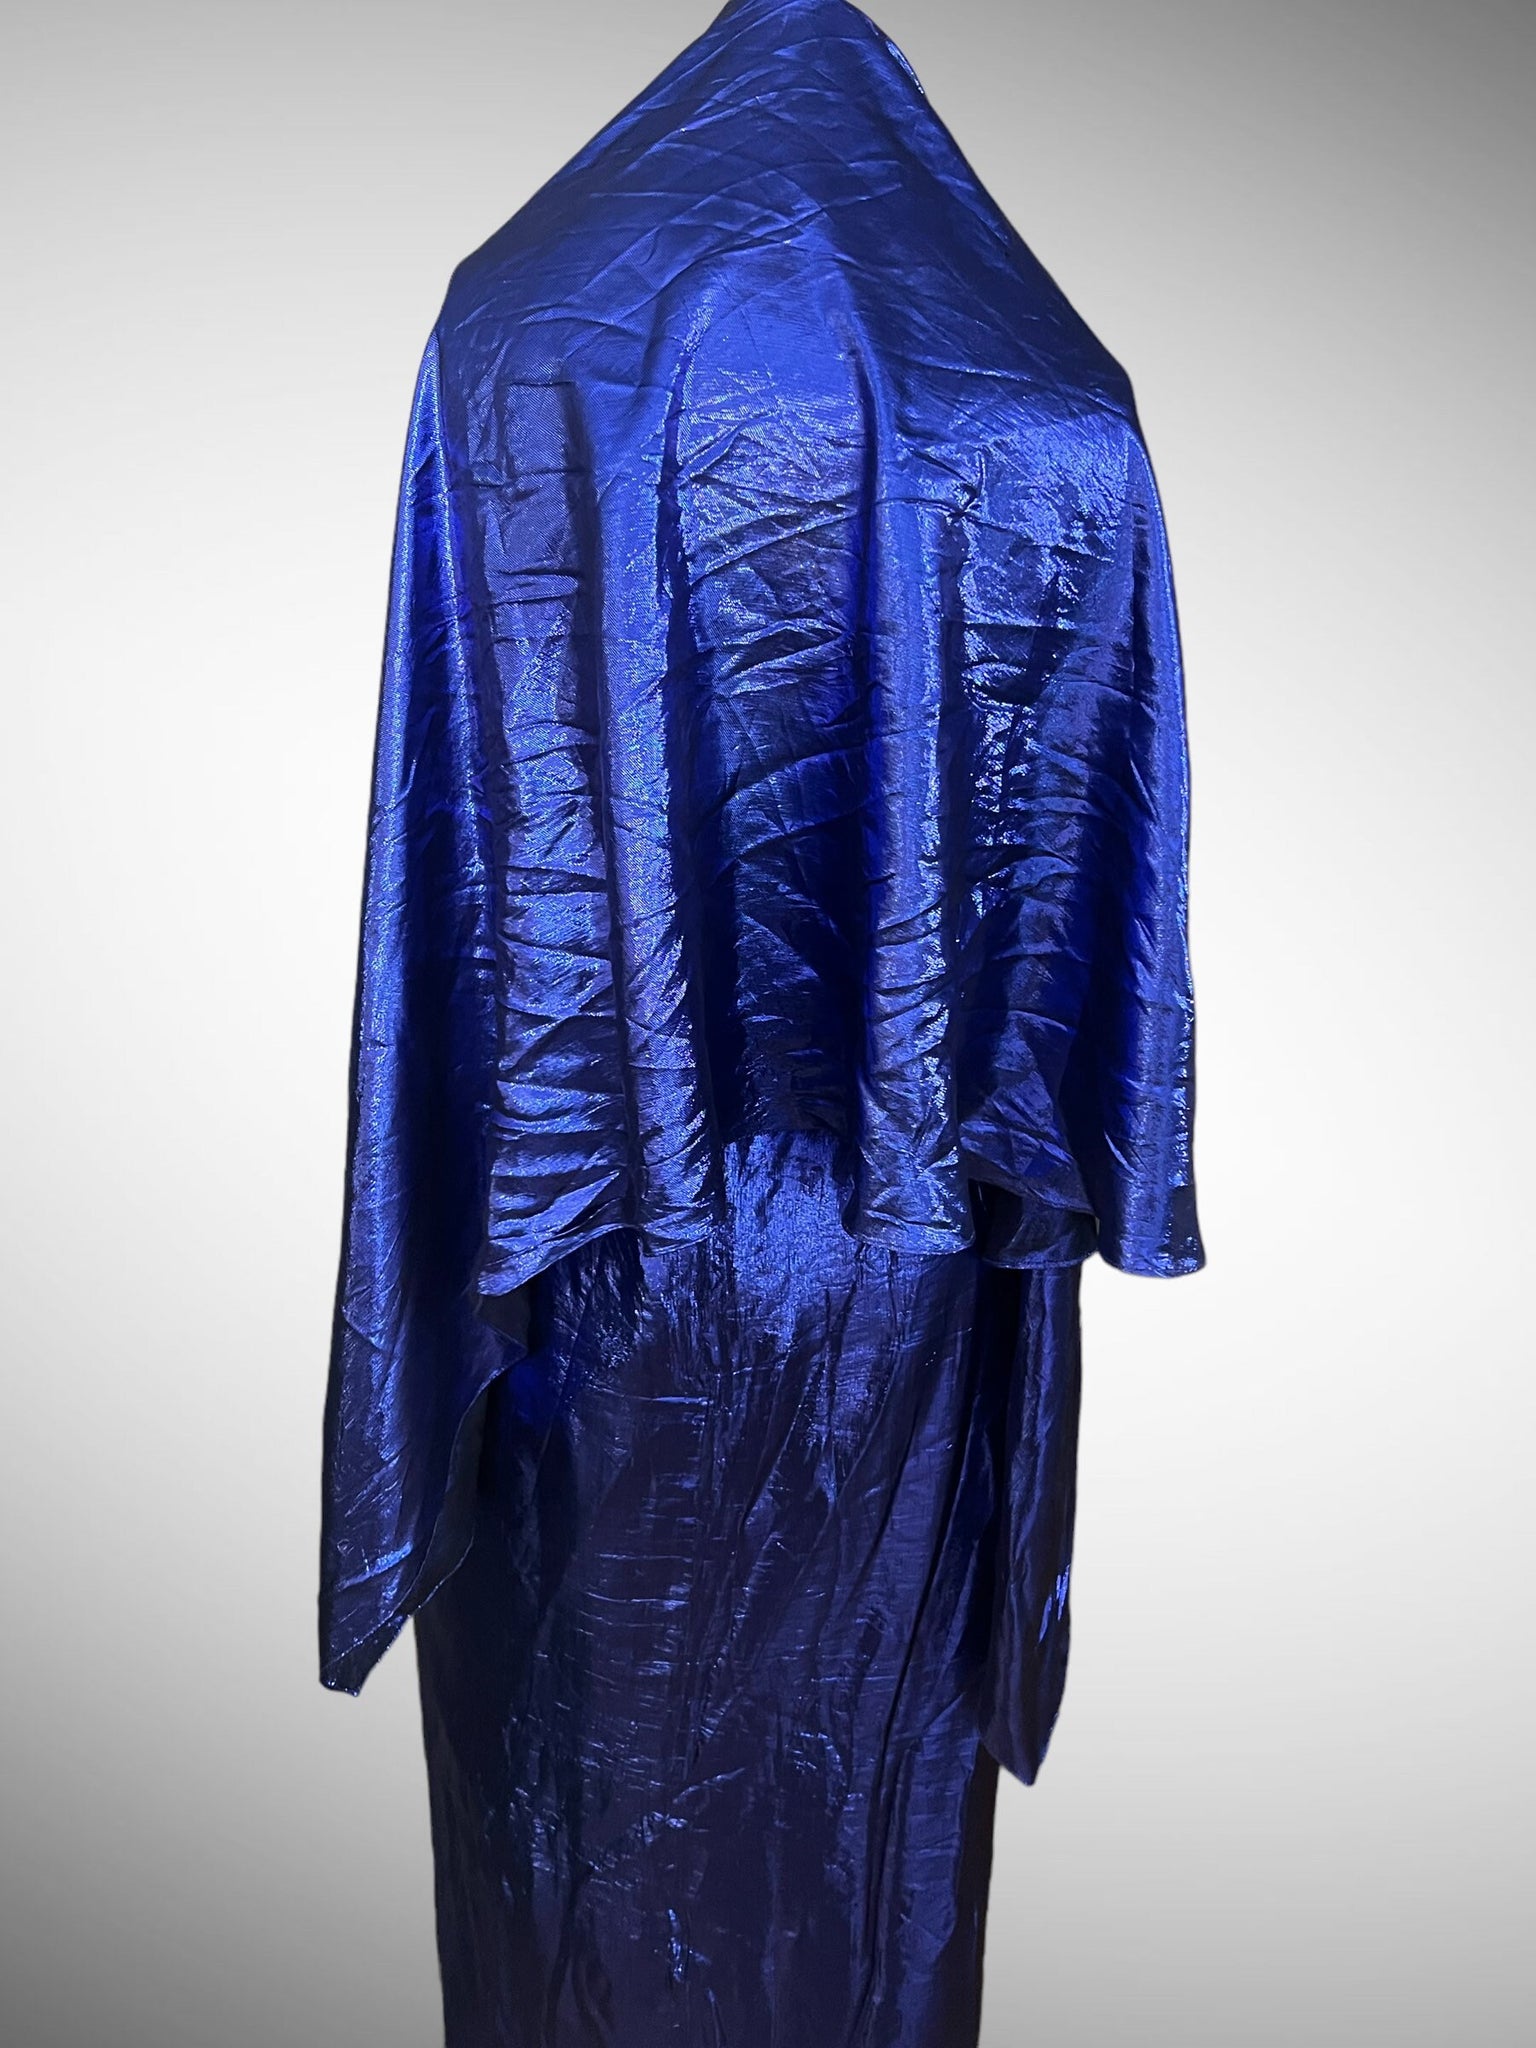 Vintage 80's Victor Costa metallic strapless dress blue M L